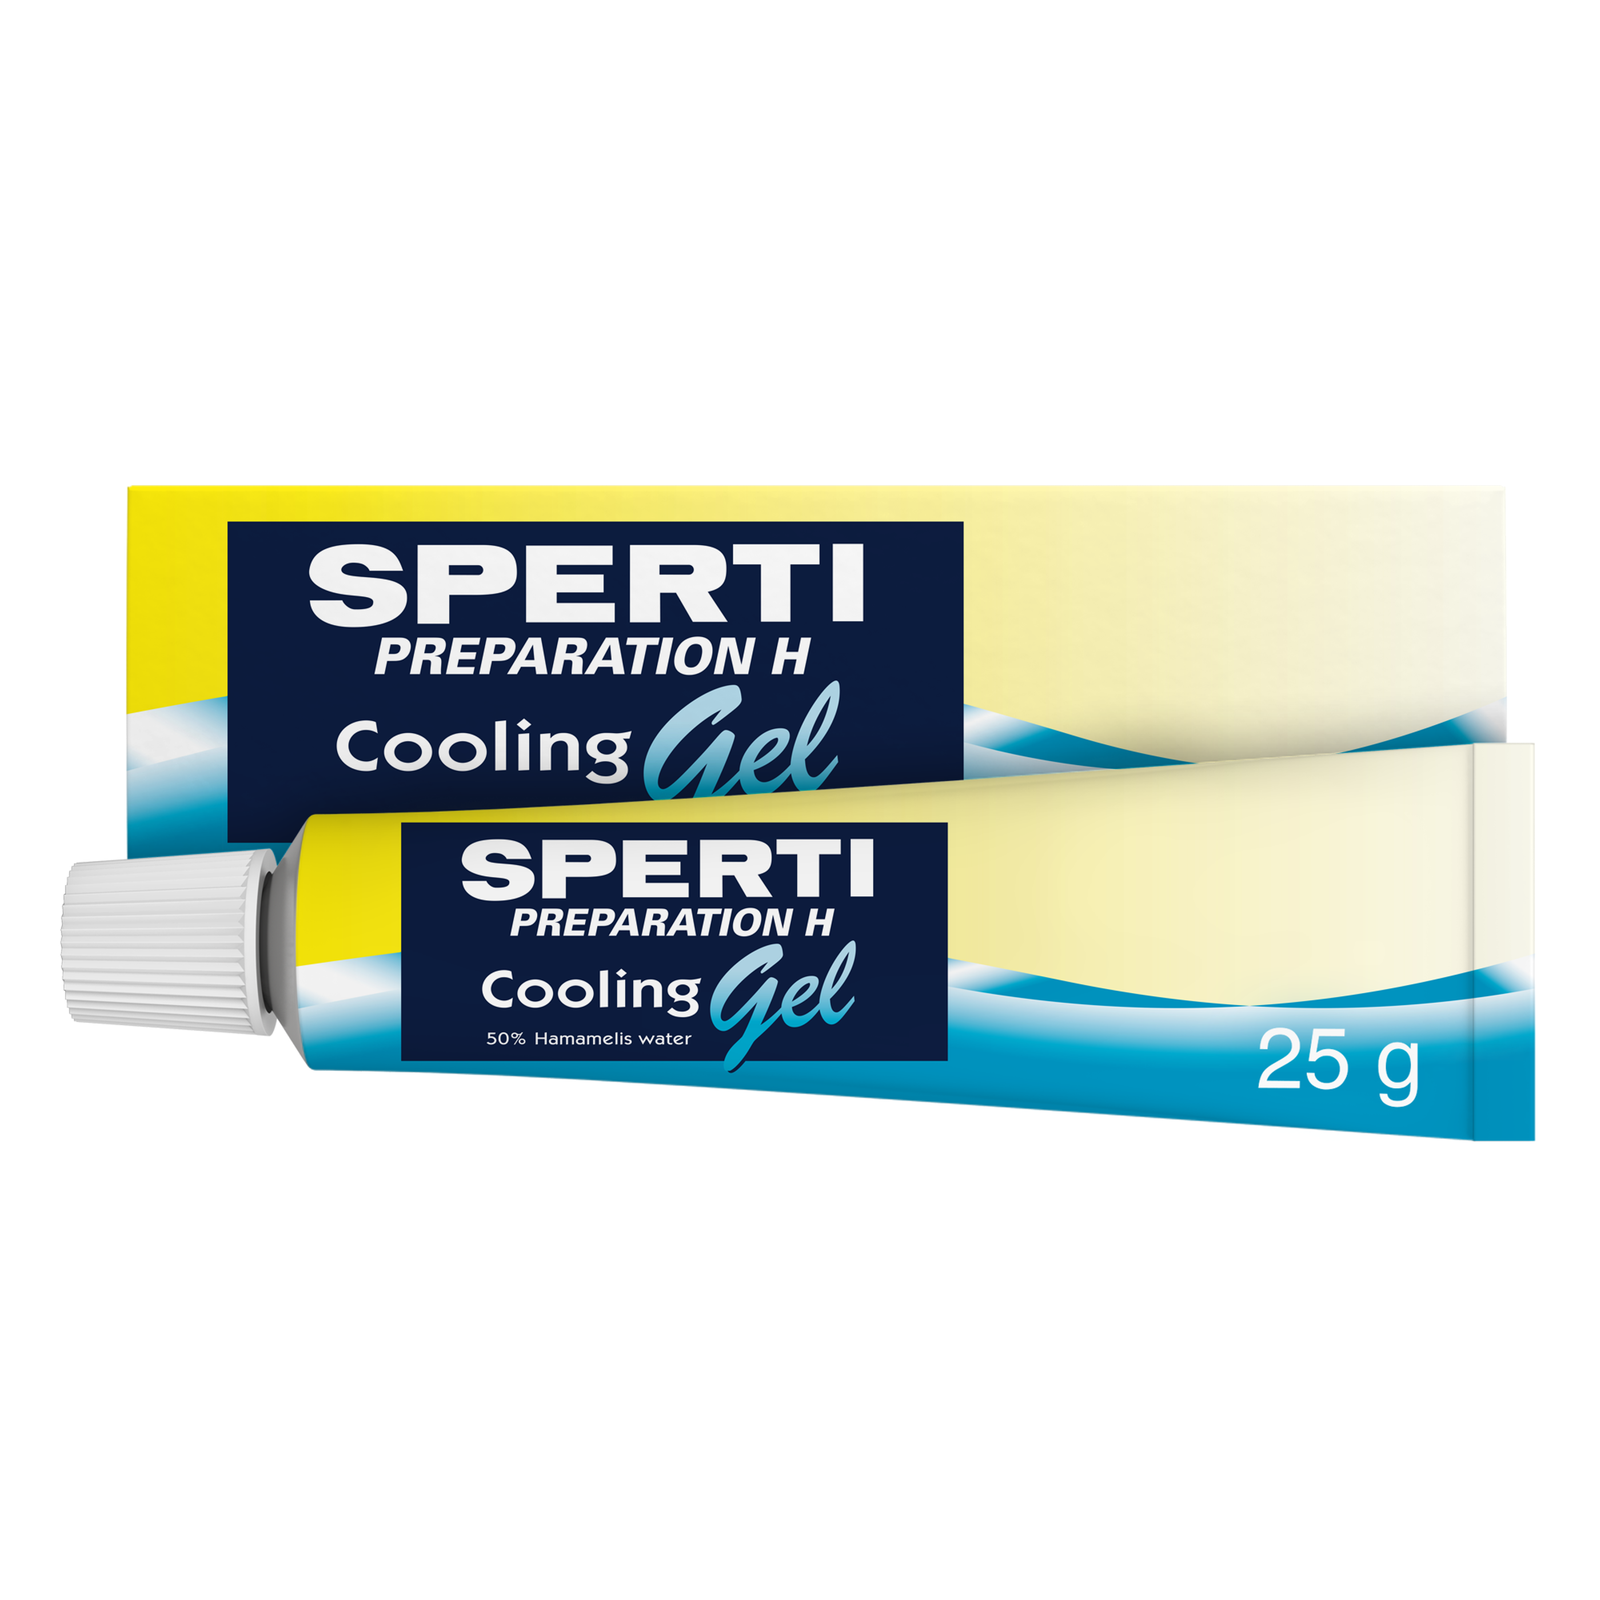 Sperti Cooling Gel Preparation H